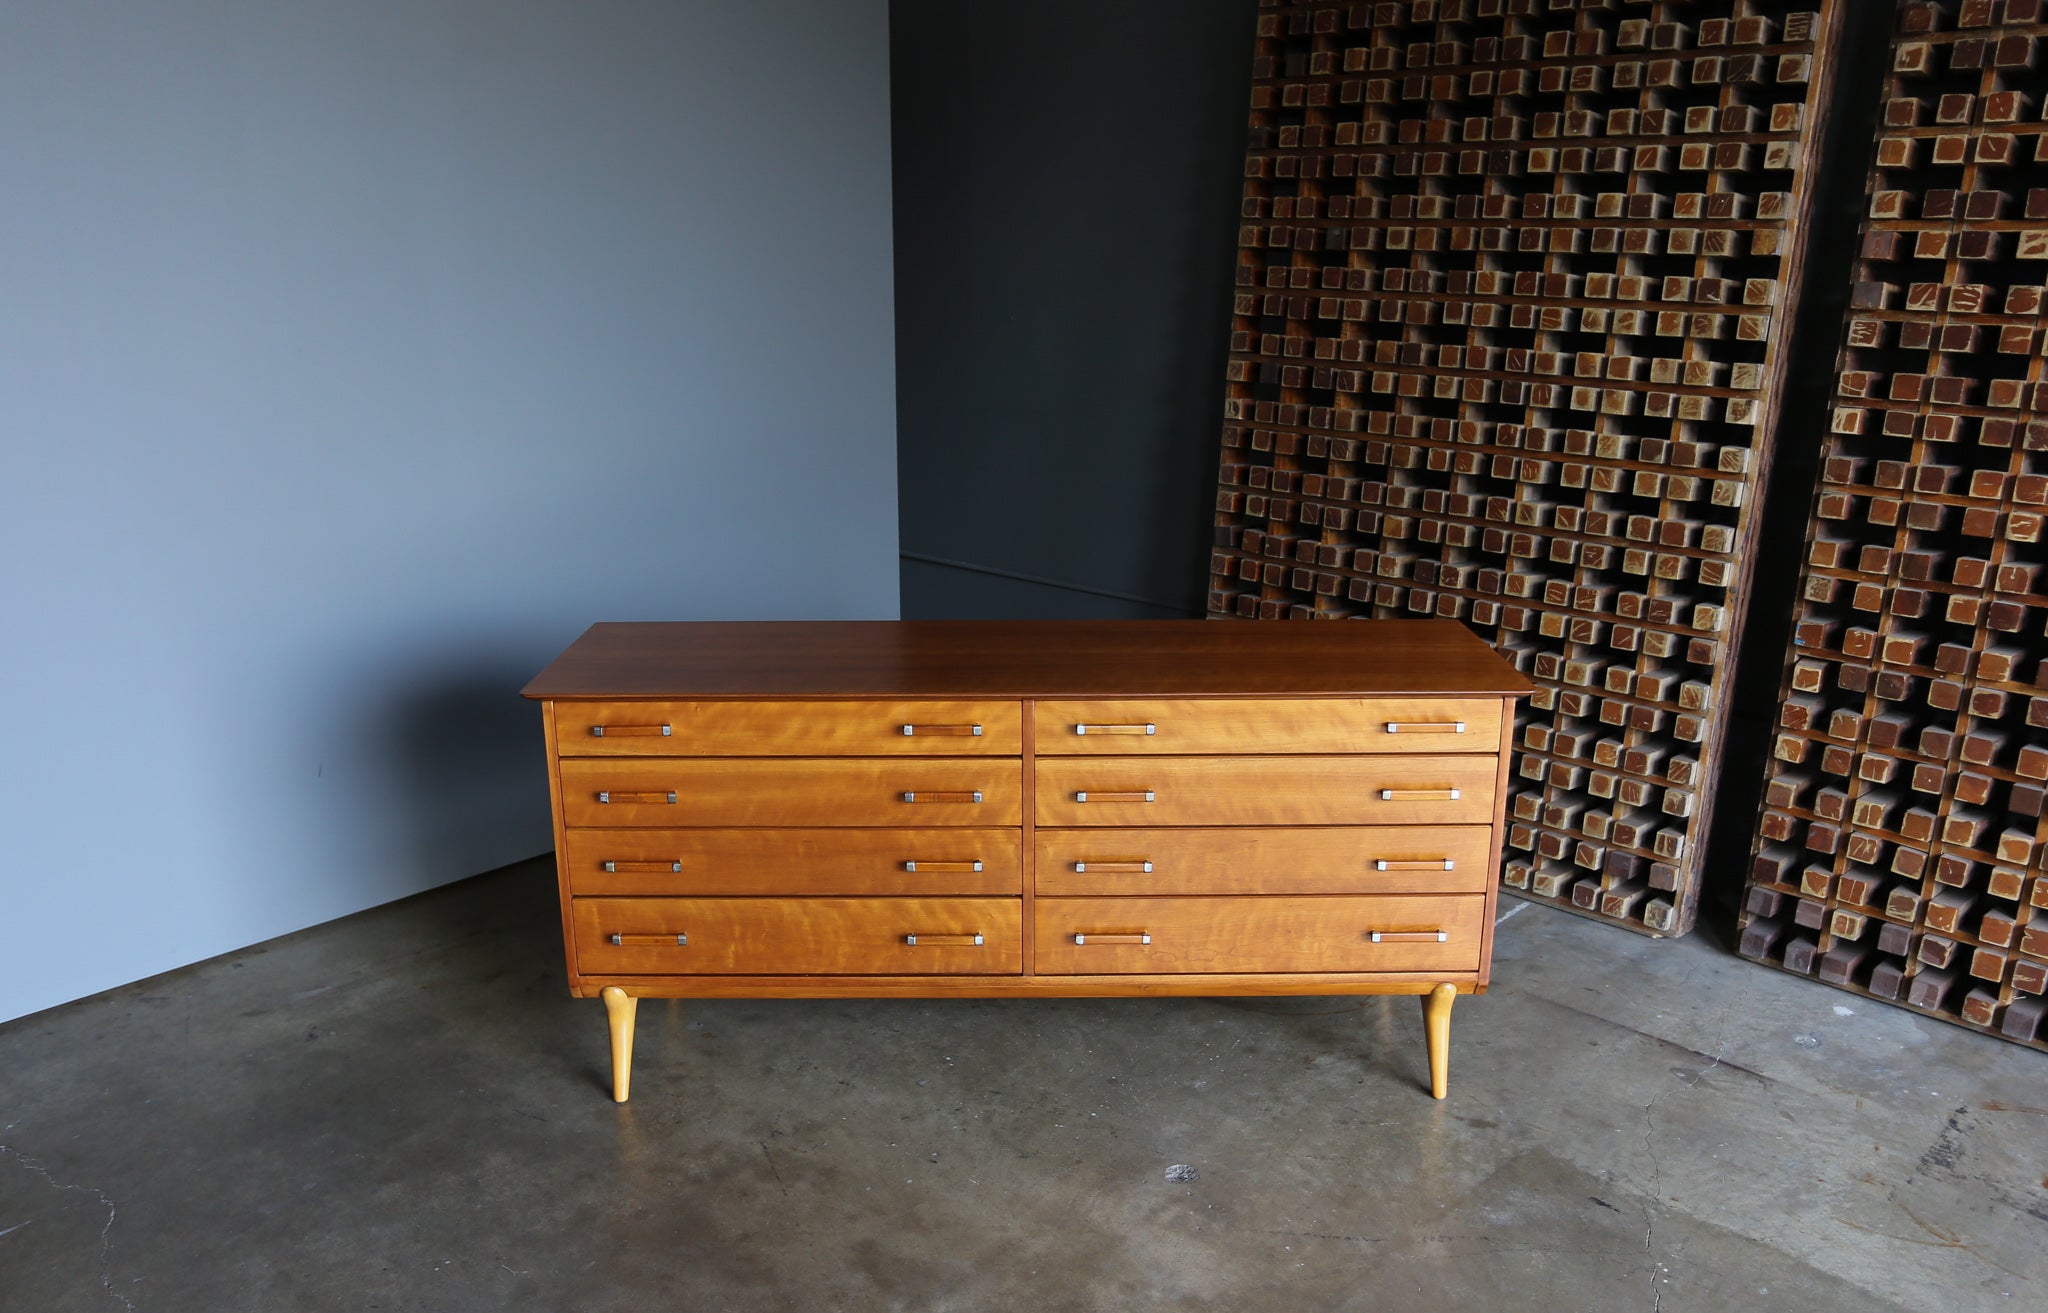 = SOLD = Renzo Rutili Chest of Drawers for Johnson Furniture Company, circa 1955